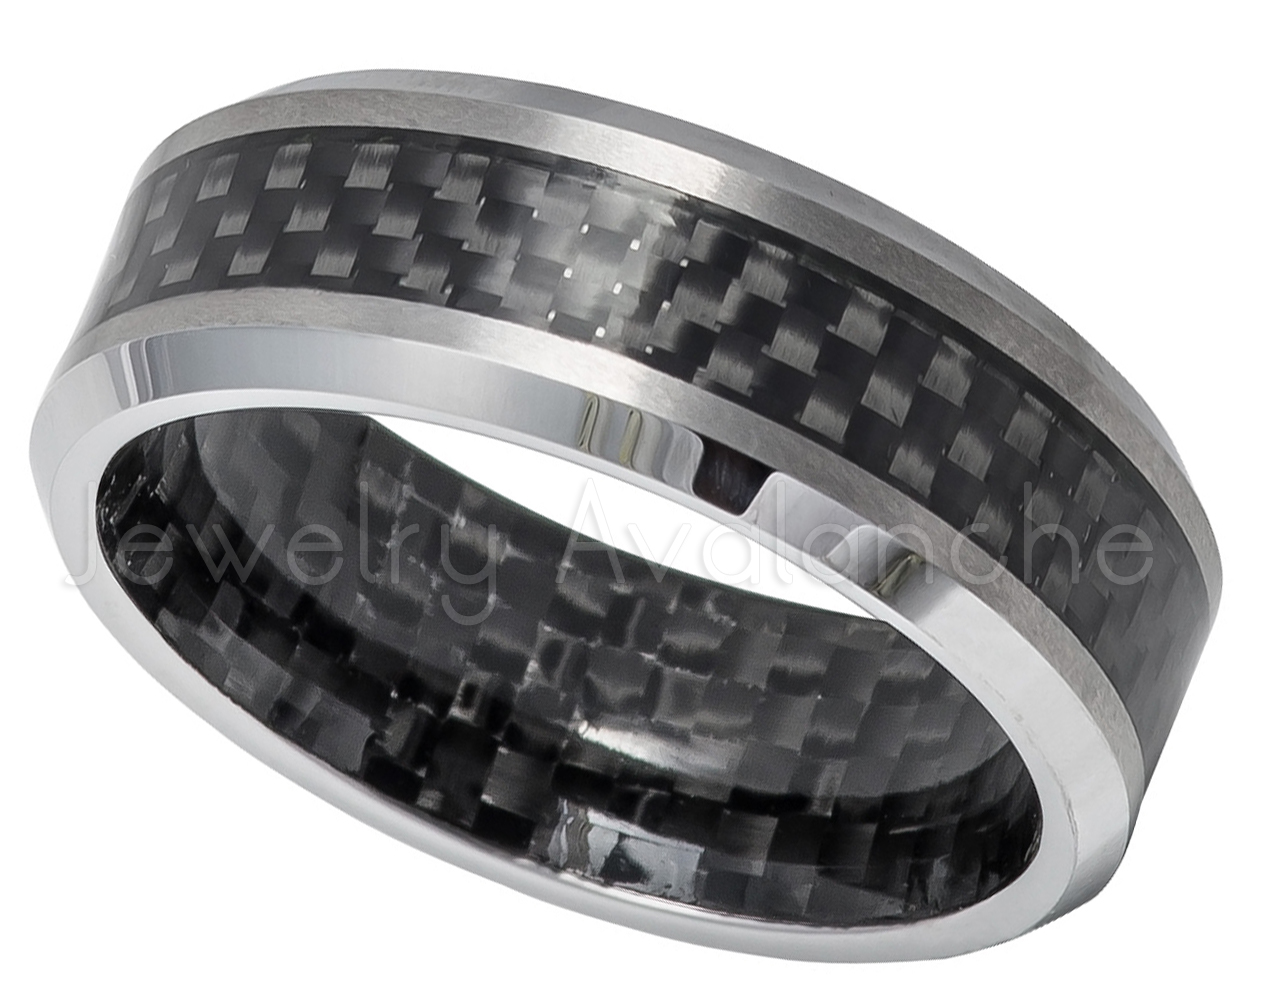 Comfort Fit Wedding Band Mens 8mm Beveled Edge Black Ceramic Ring w/ Red Carbon Fiber Inlay Center s11